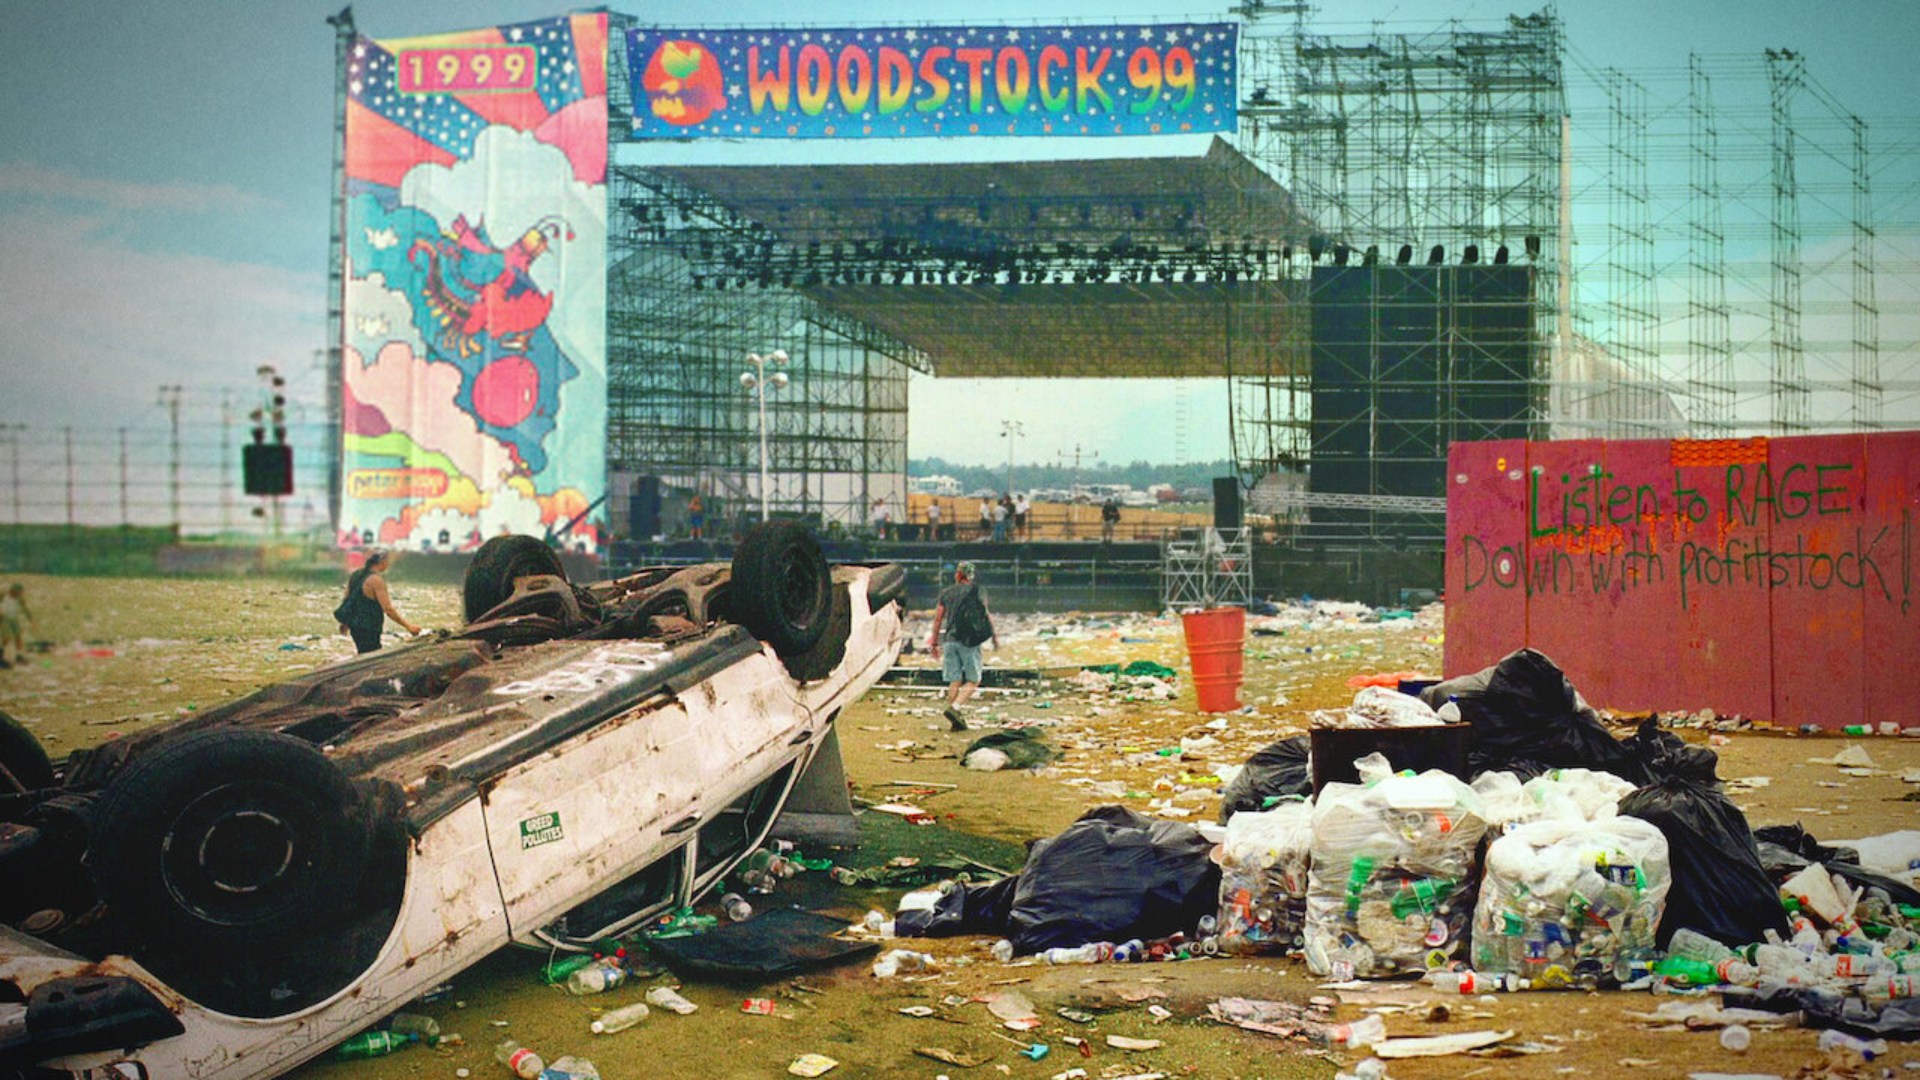 Conheça Limp Bizkit, banda que participou do Woodstock 99' e do Lollapalooza deste ano